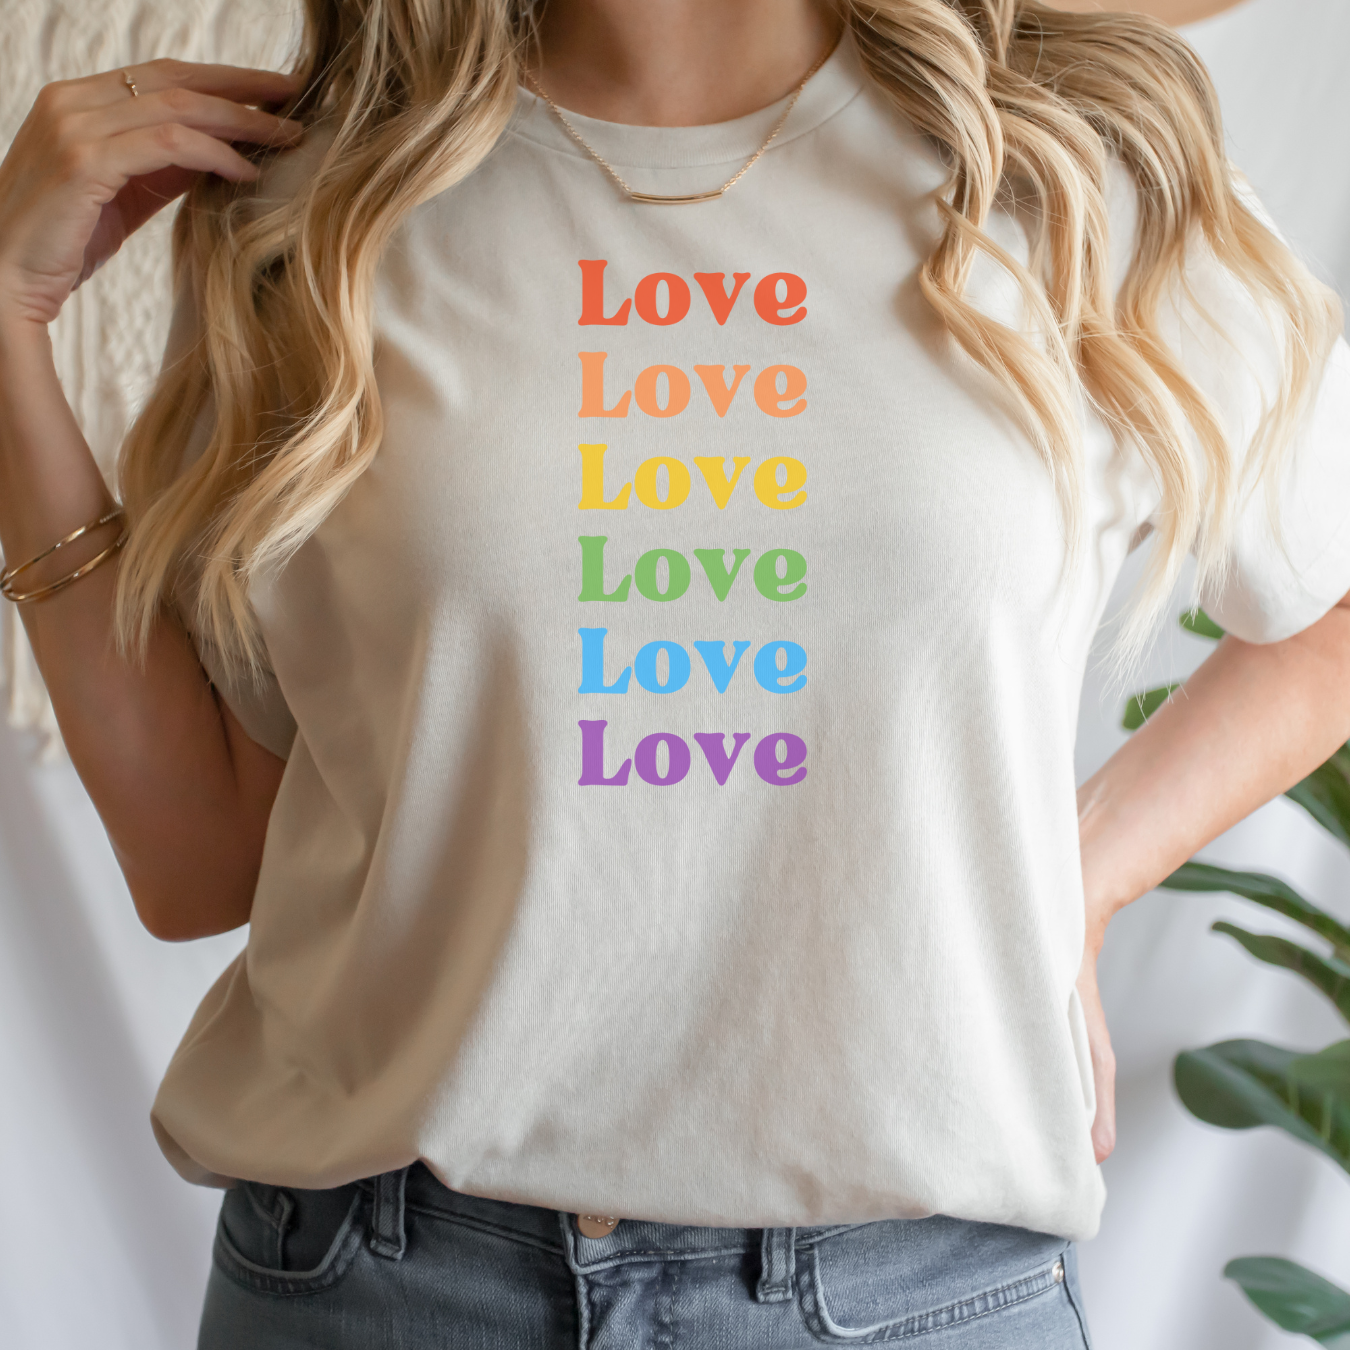 "love shirt and sweateshirt design pride colors"